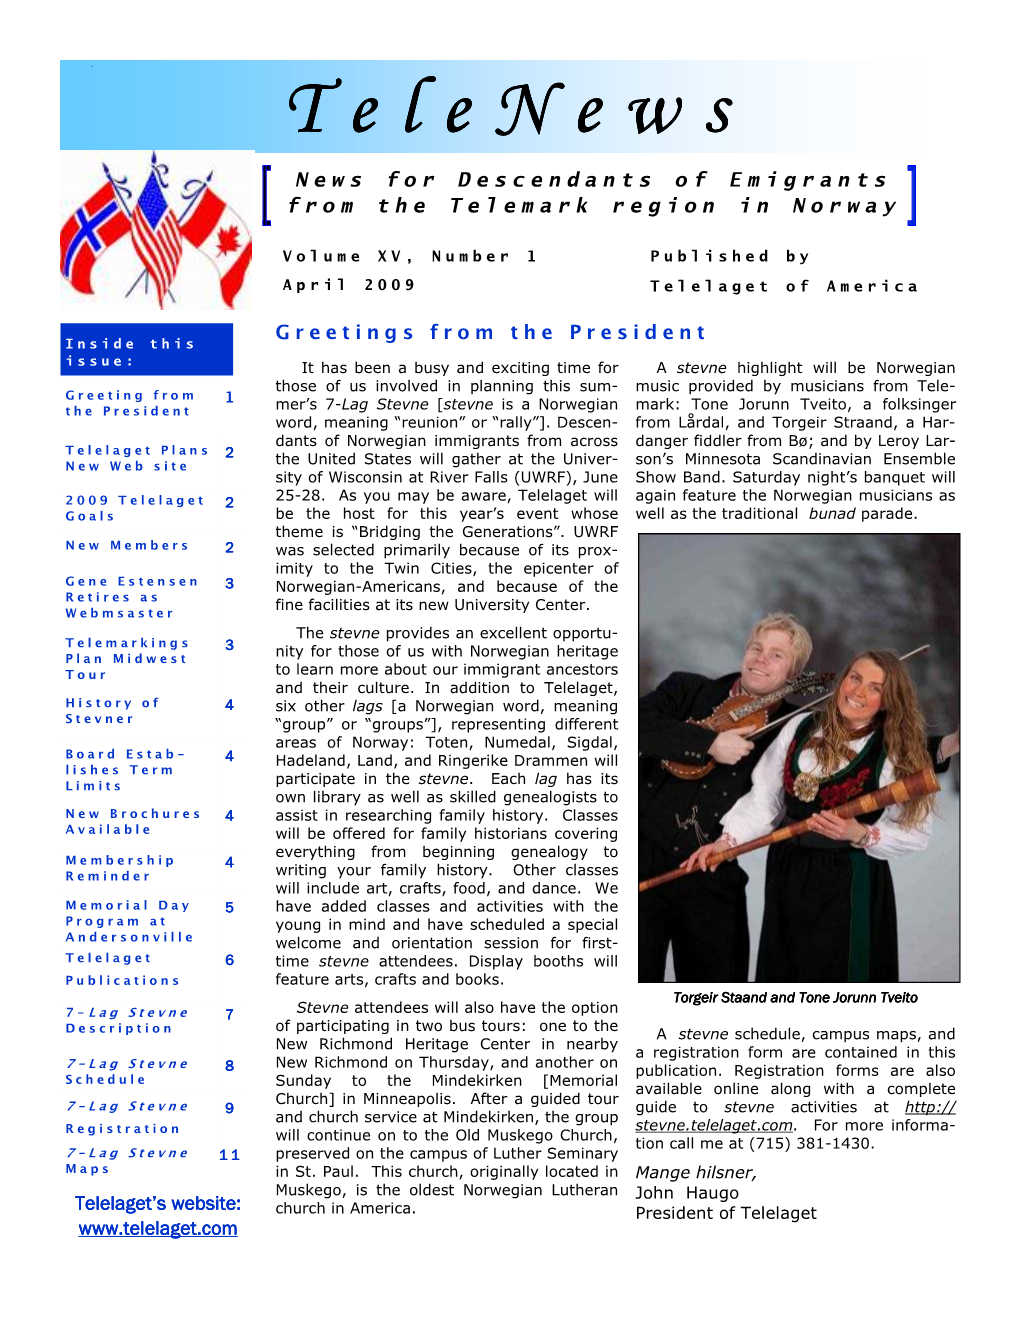 April 2009 Issue of Telenews